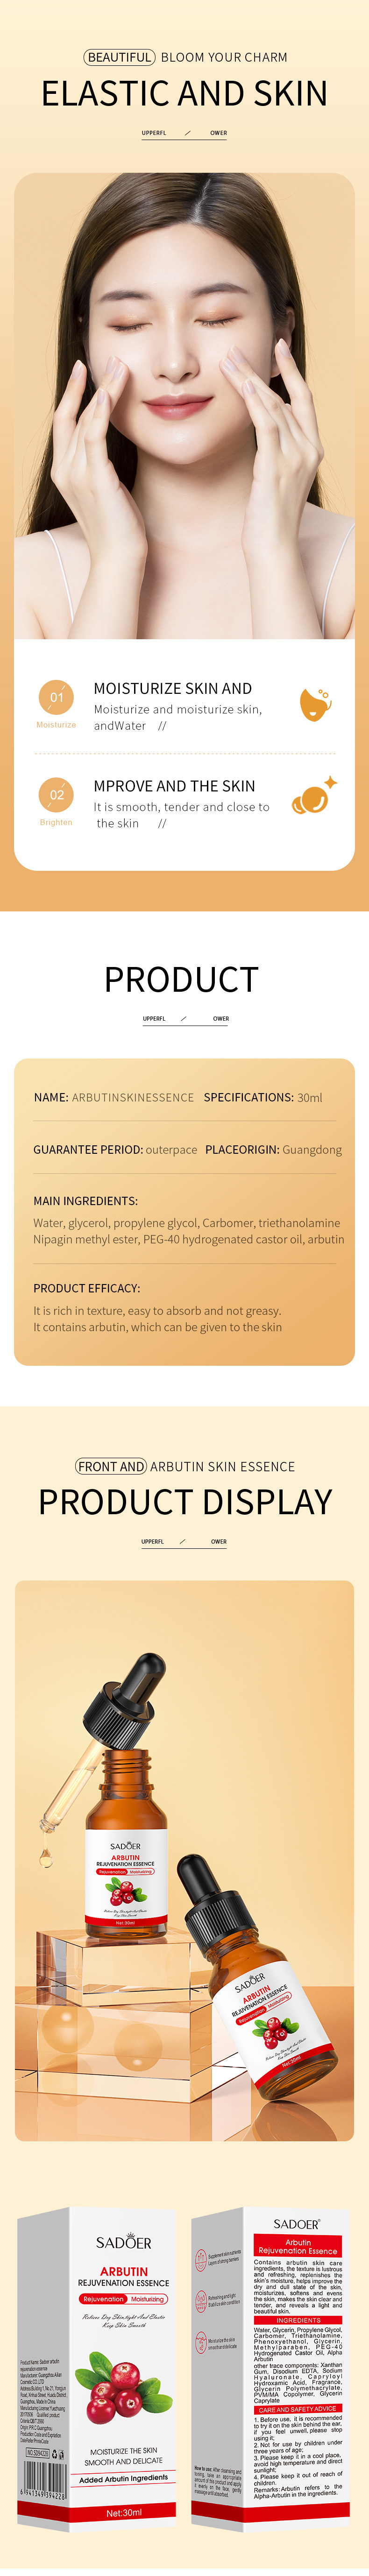 Essential Oil - Sadoer Arbutin Serum - Rejuvenating, Moisturizing, and Hydrating Skincare Solution - 30ml - SHOPEE MALL | Sri Lanka